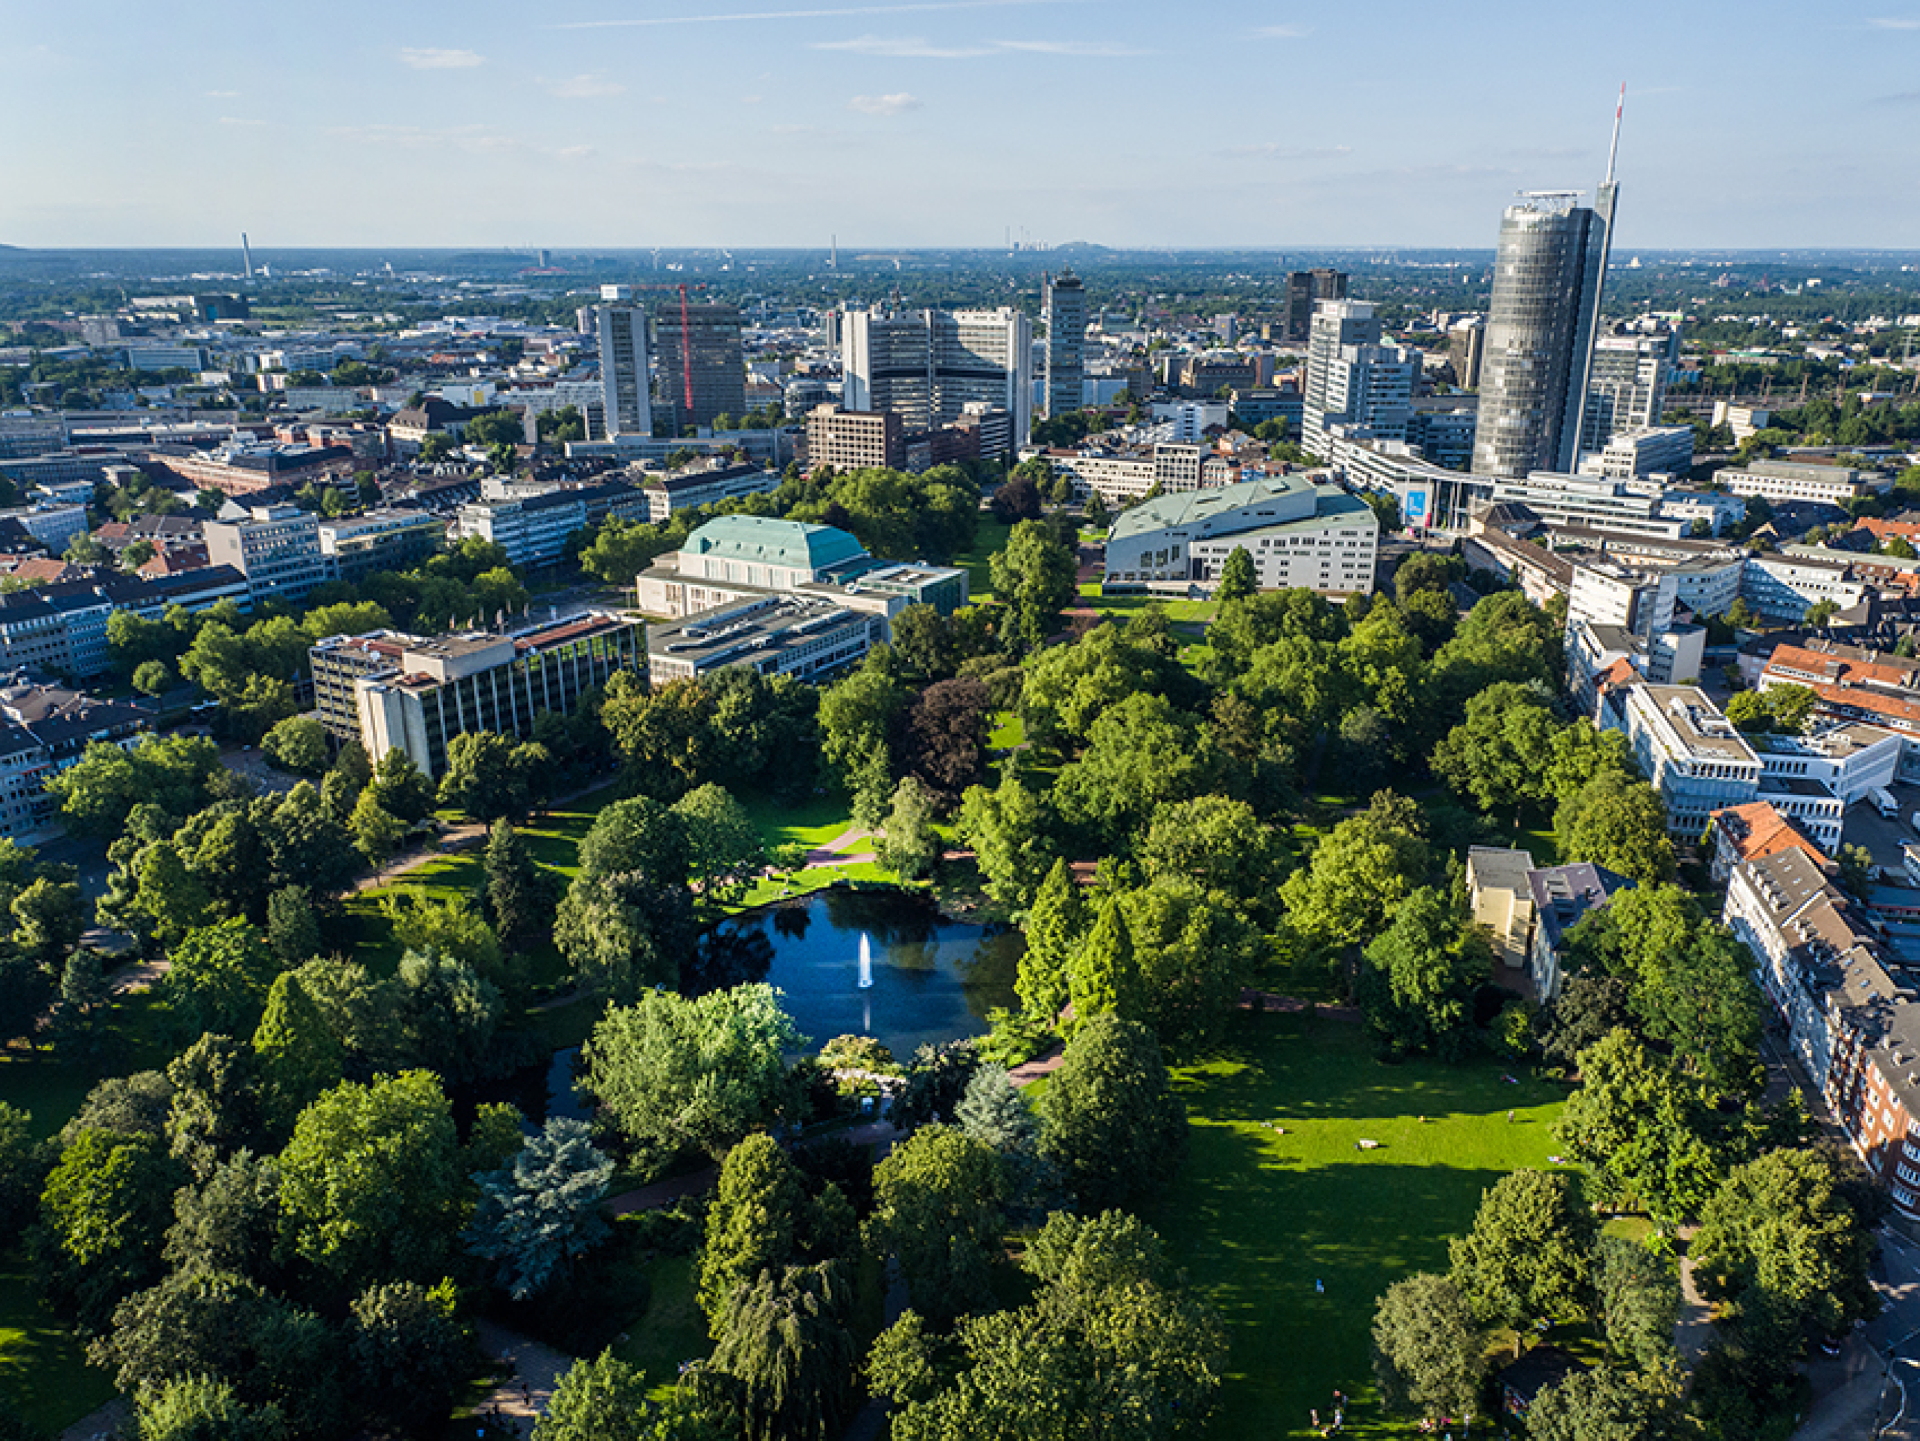  Essen  Germany  is the 2022 European Green Capital 